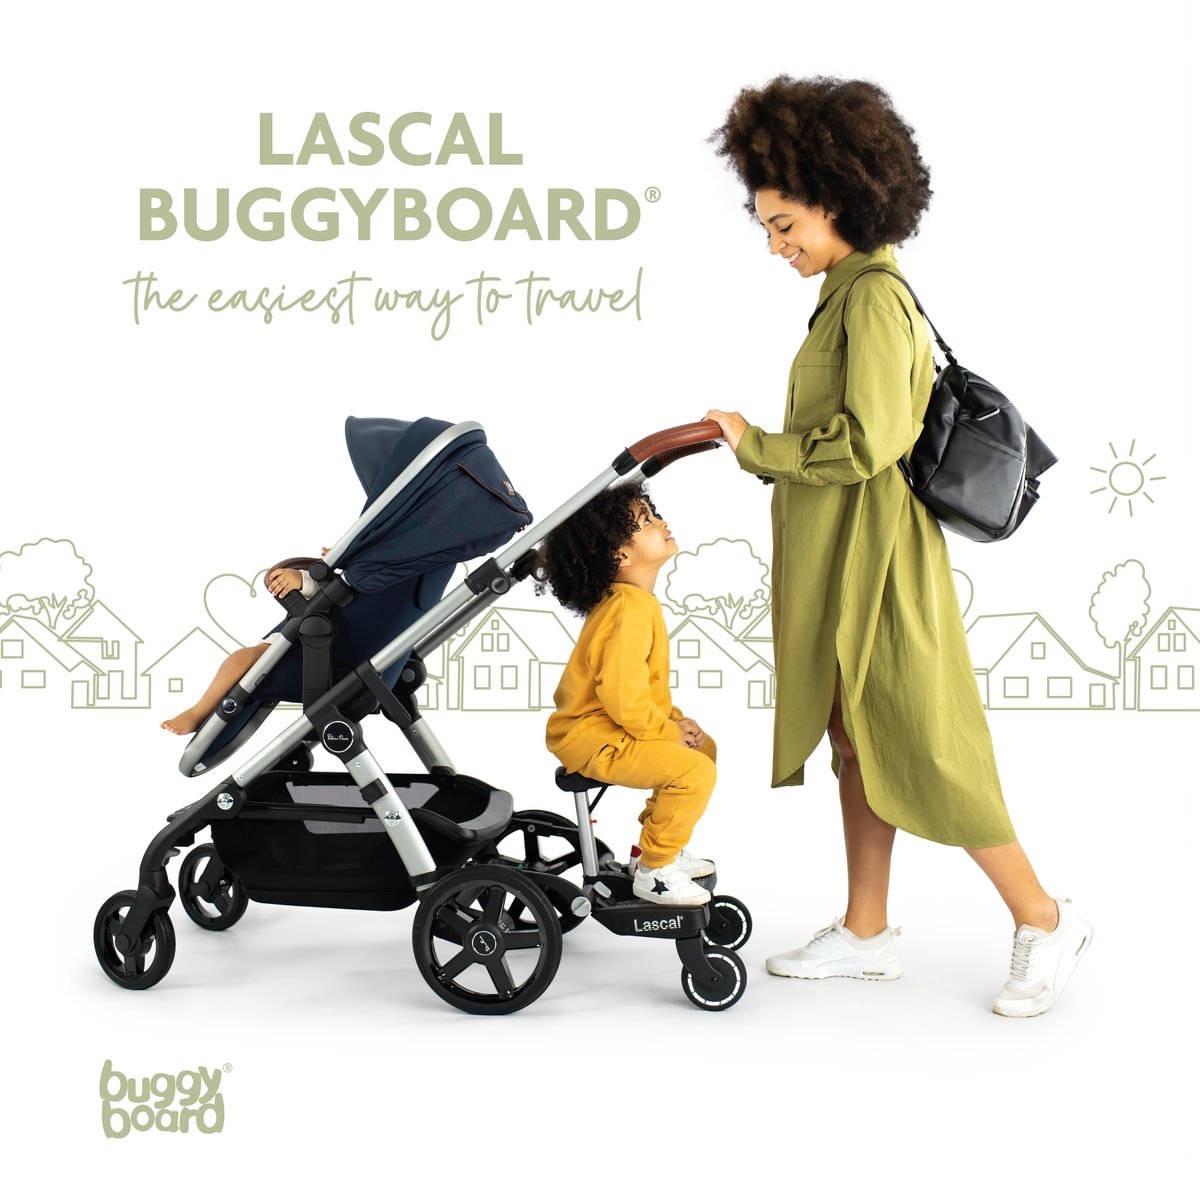 Lascal buggy board maxi plus